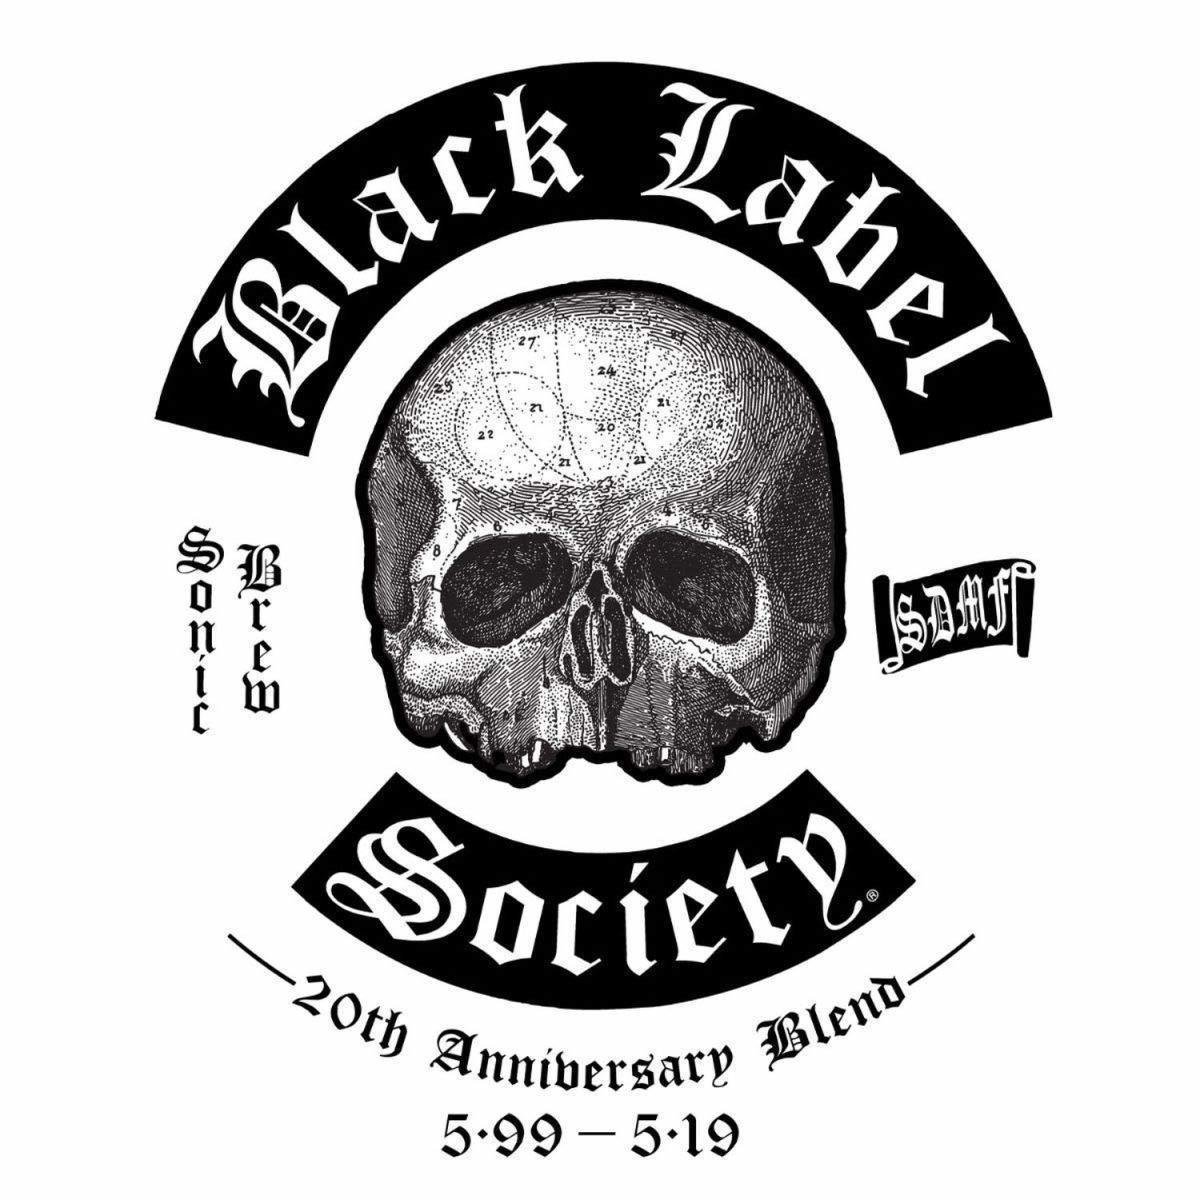 Disco in vinile Black Label Society - Sonic Brew - 20th Anniversary Blend 5.99 - 5.19 (2 LP)